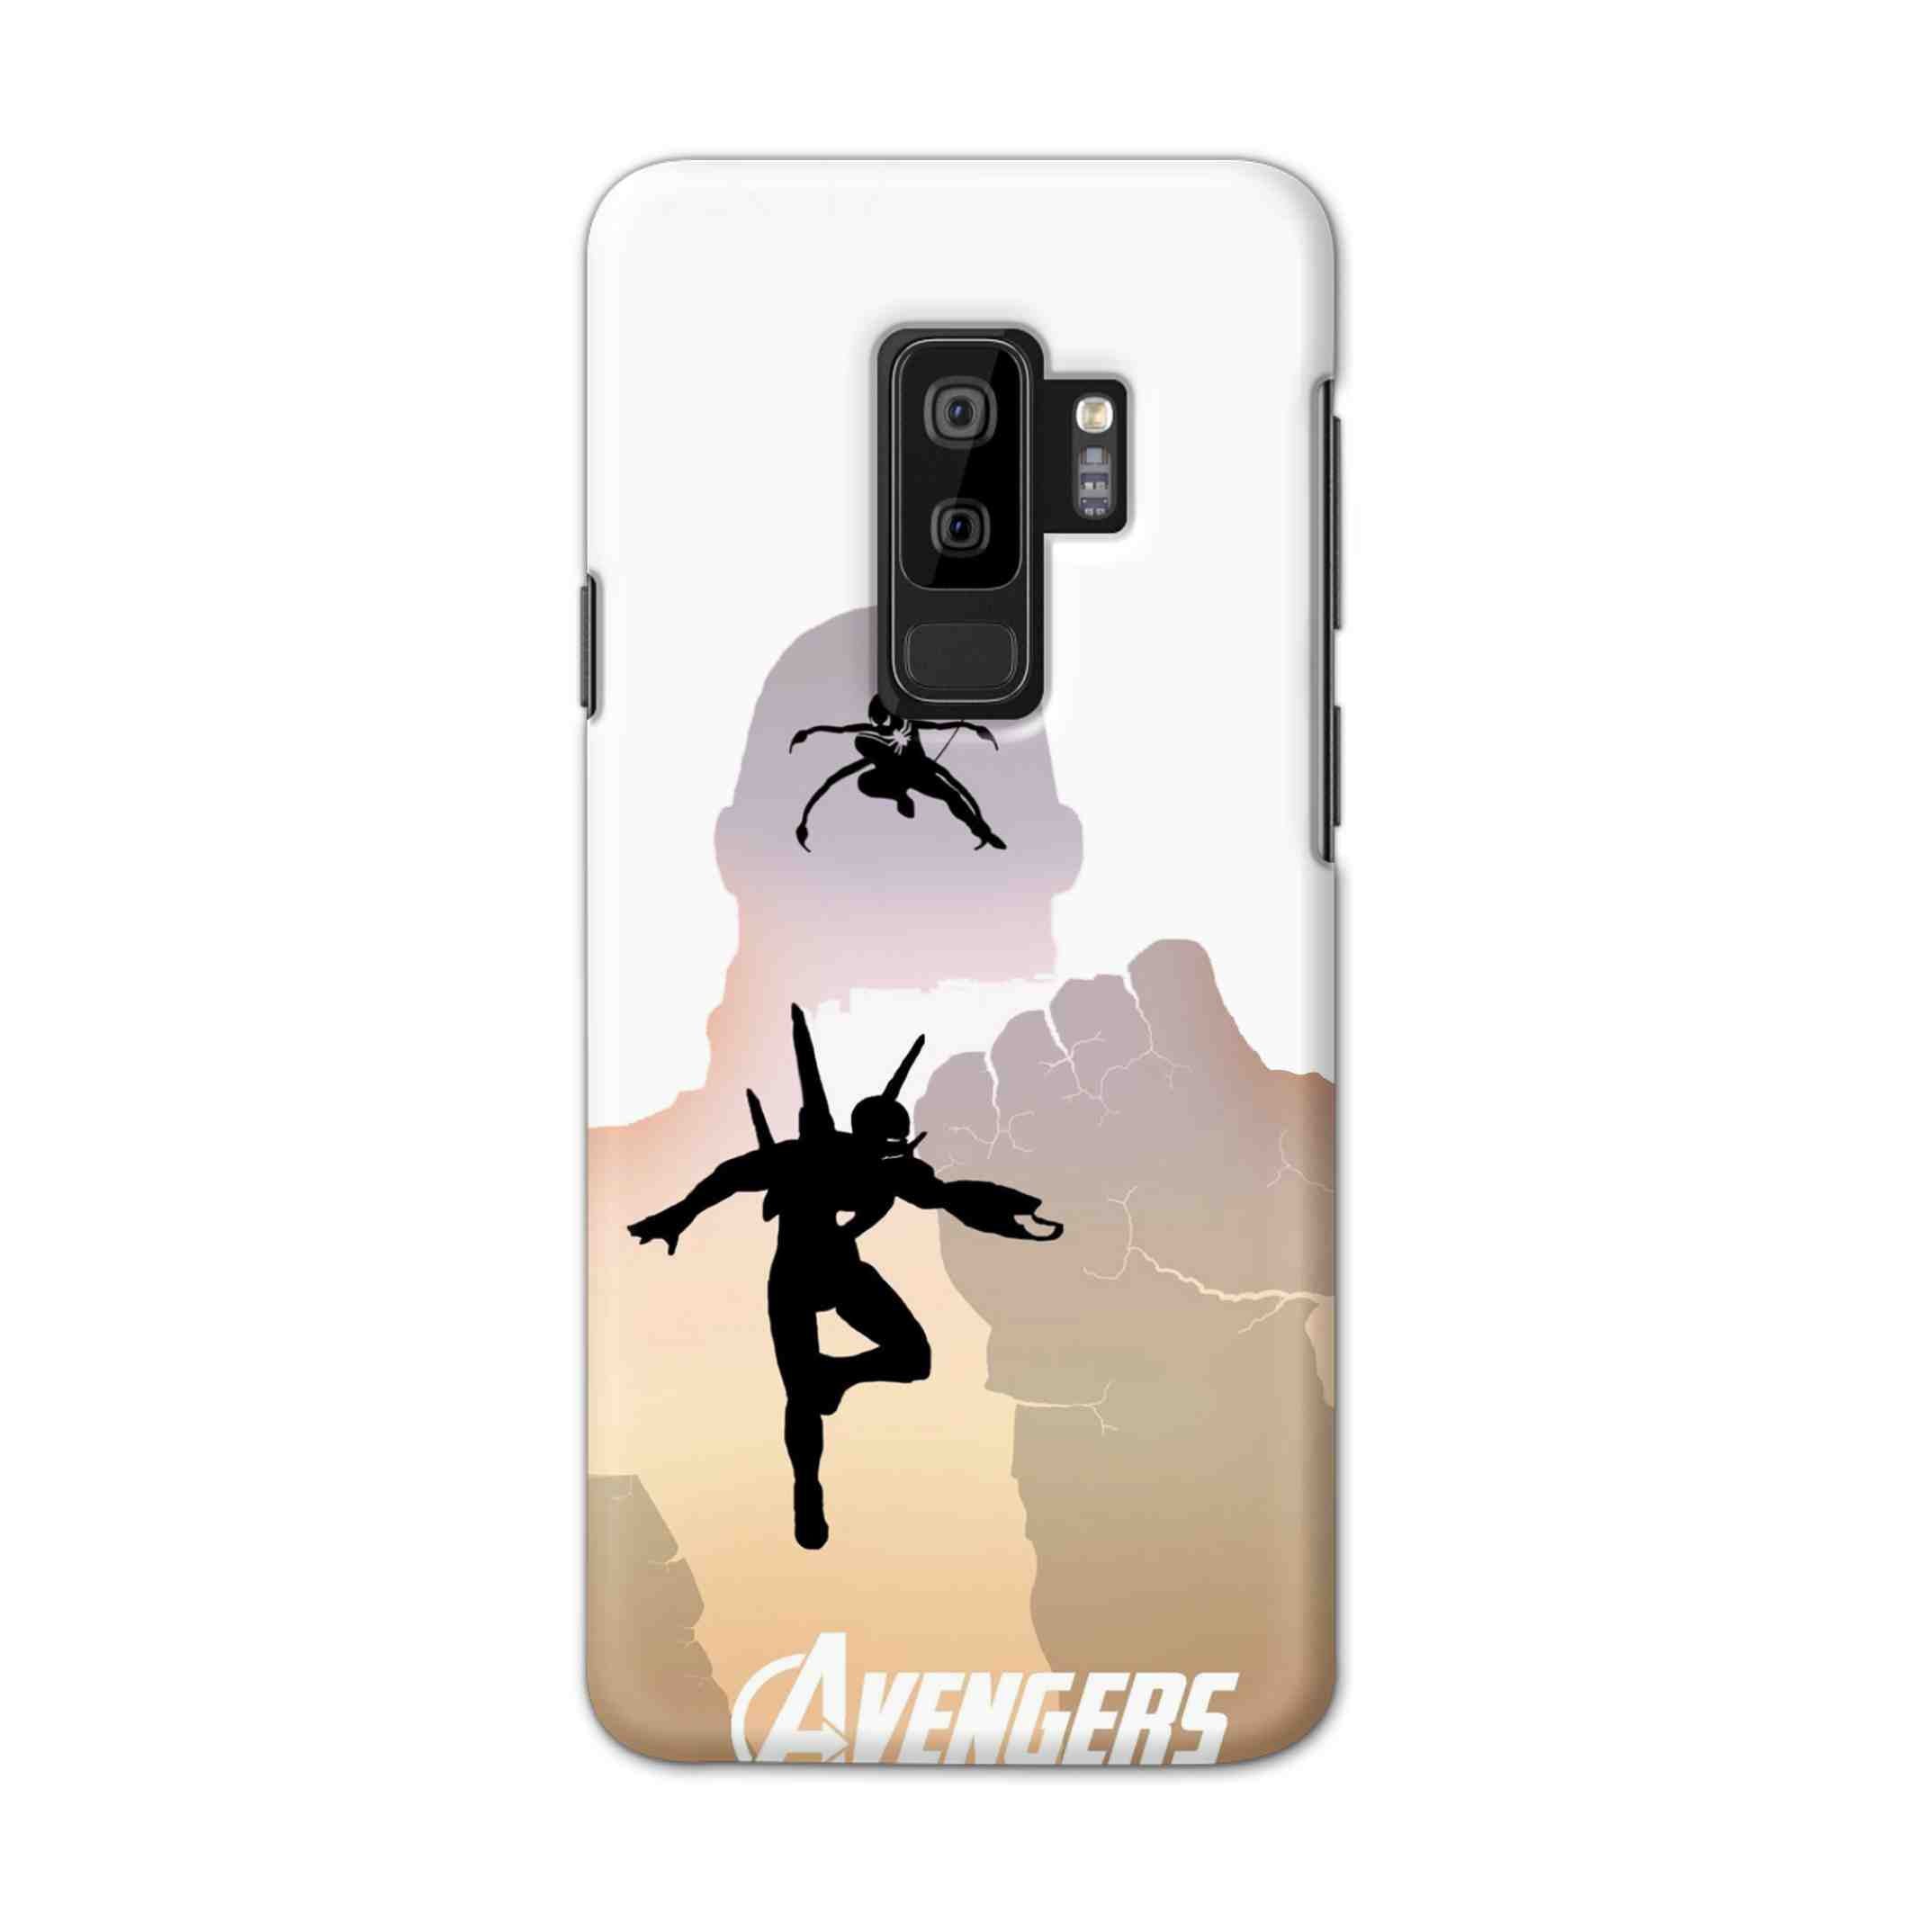 Buy Iron Man Vs Spiderman Hard Back Mobile Phone Case Cover For Samsung S9 plus Online